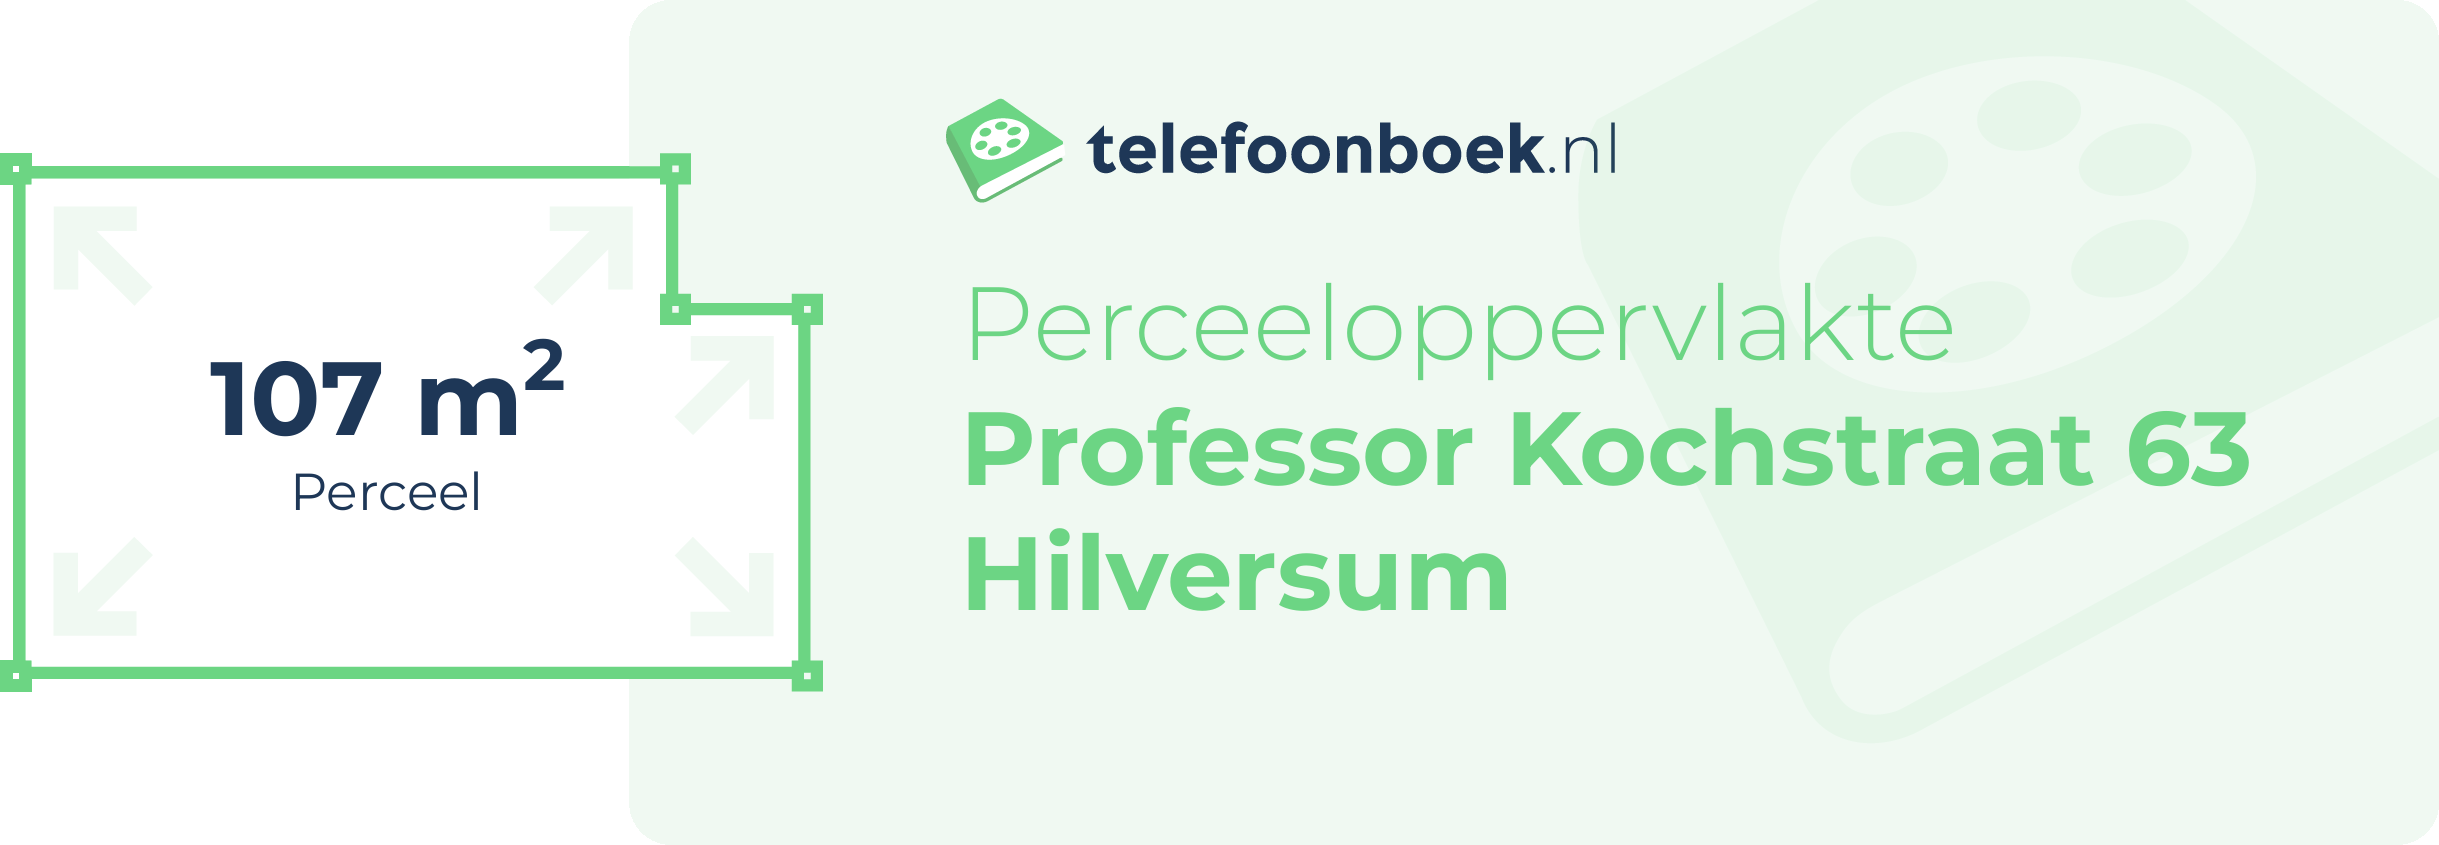 Perceeloppervlakte Professor Kochstraat 63 Hilversum